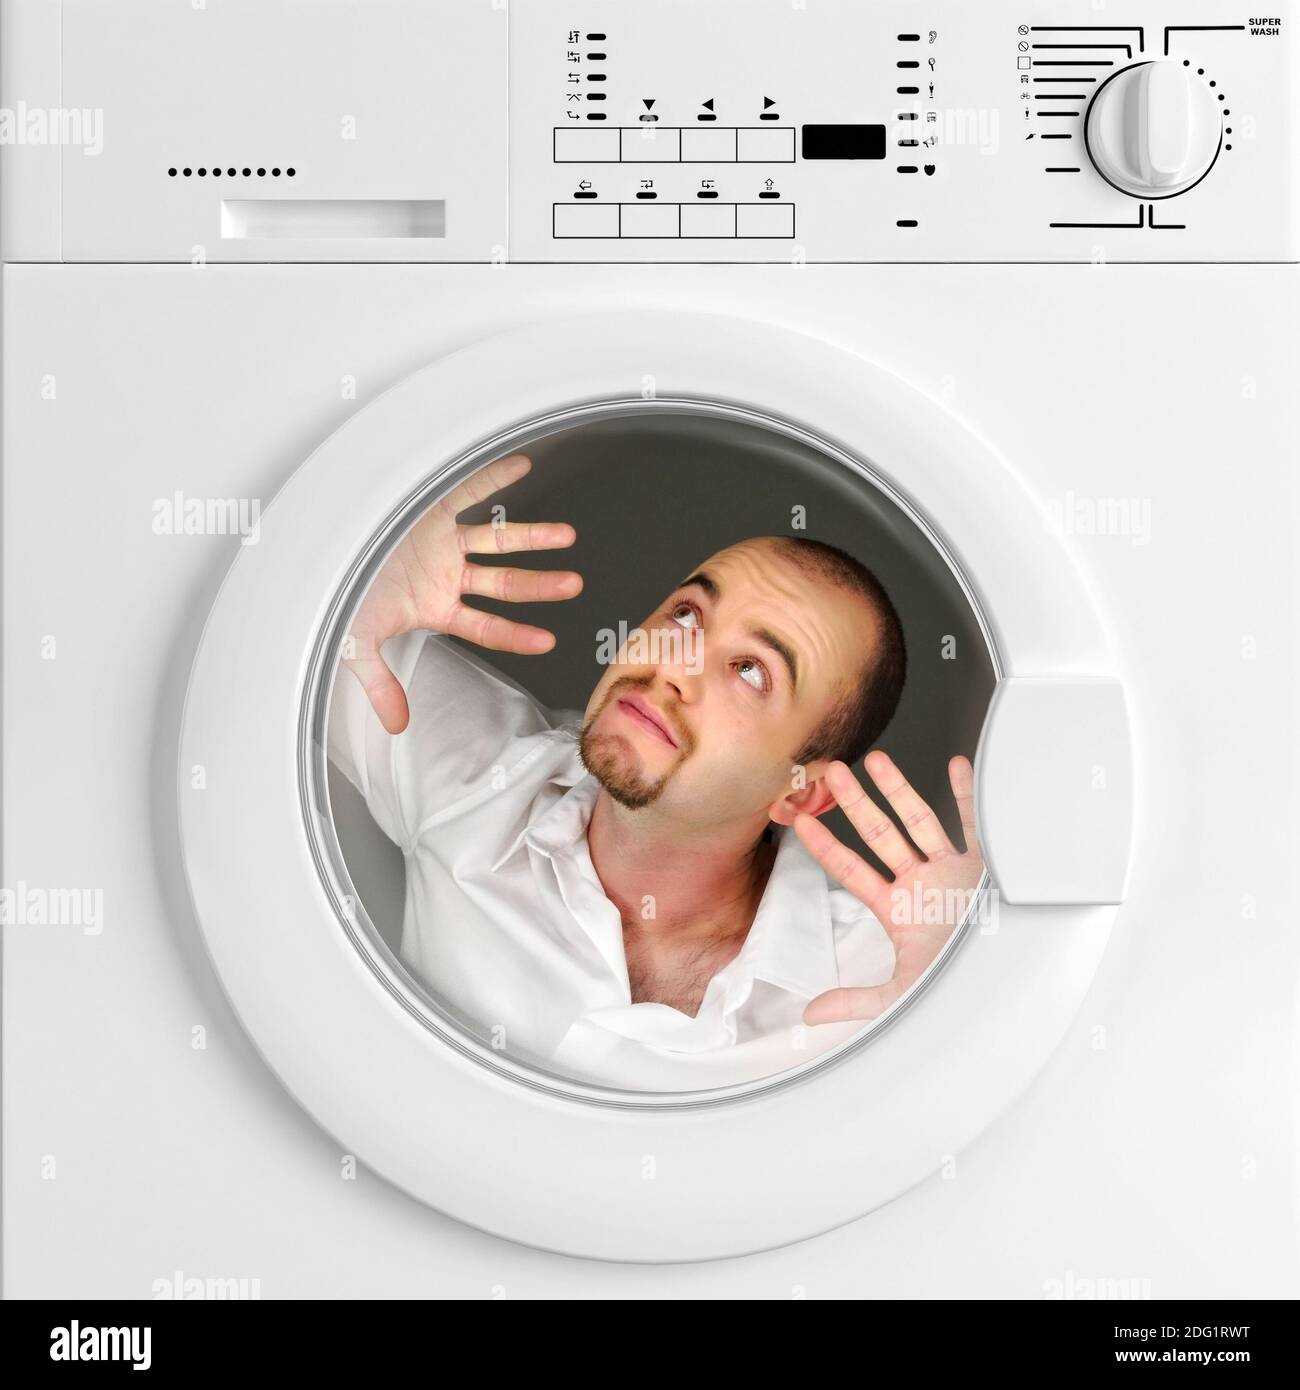 Funny portrait of man inside washing machine Stock Photo - Alamy